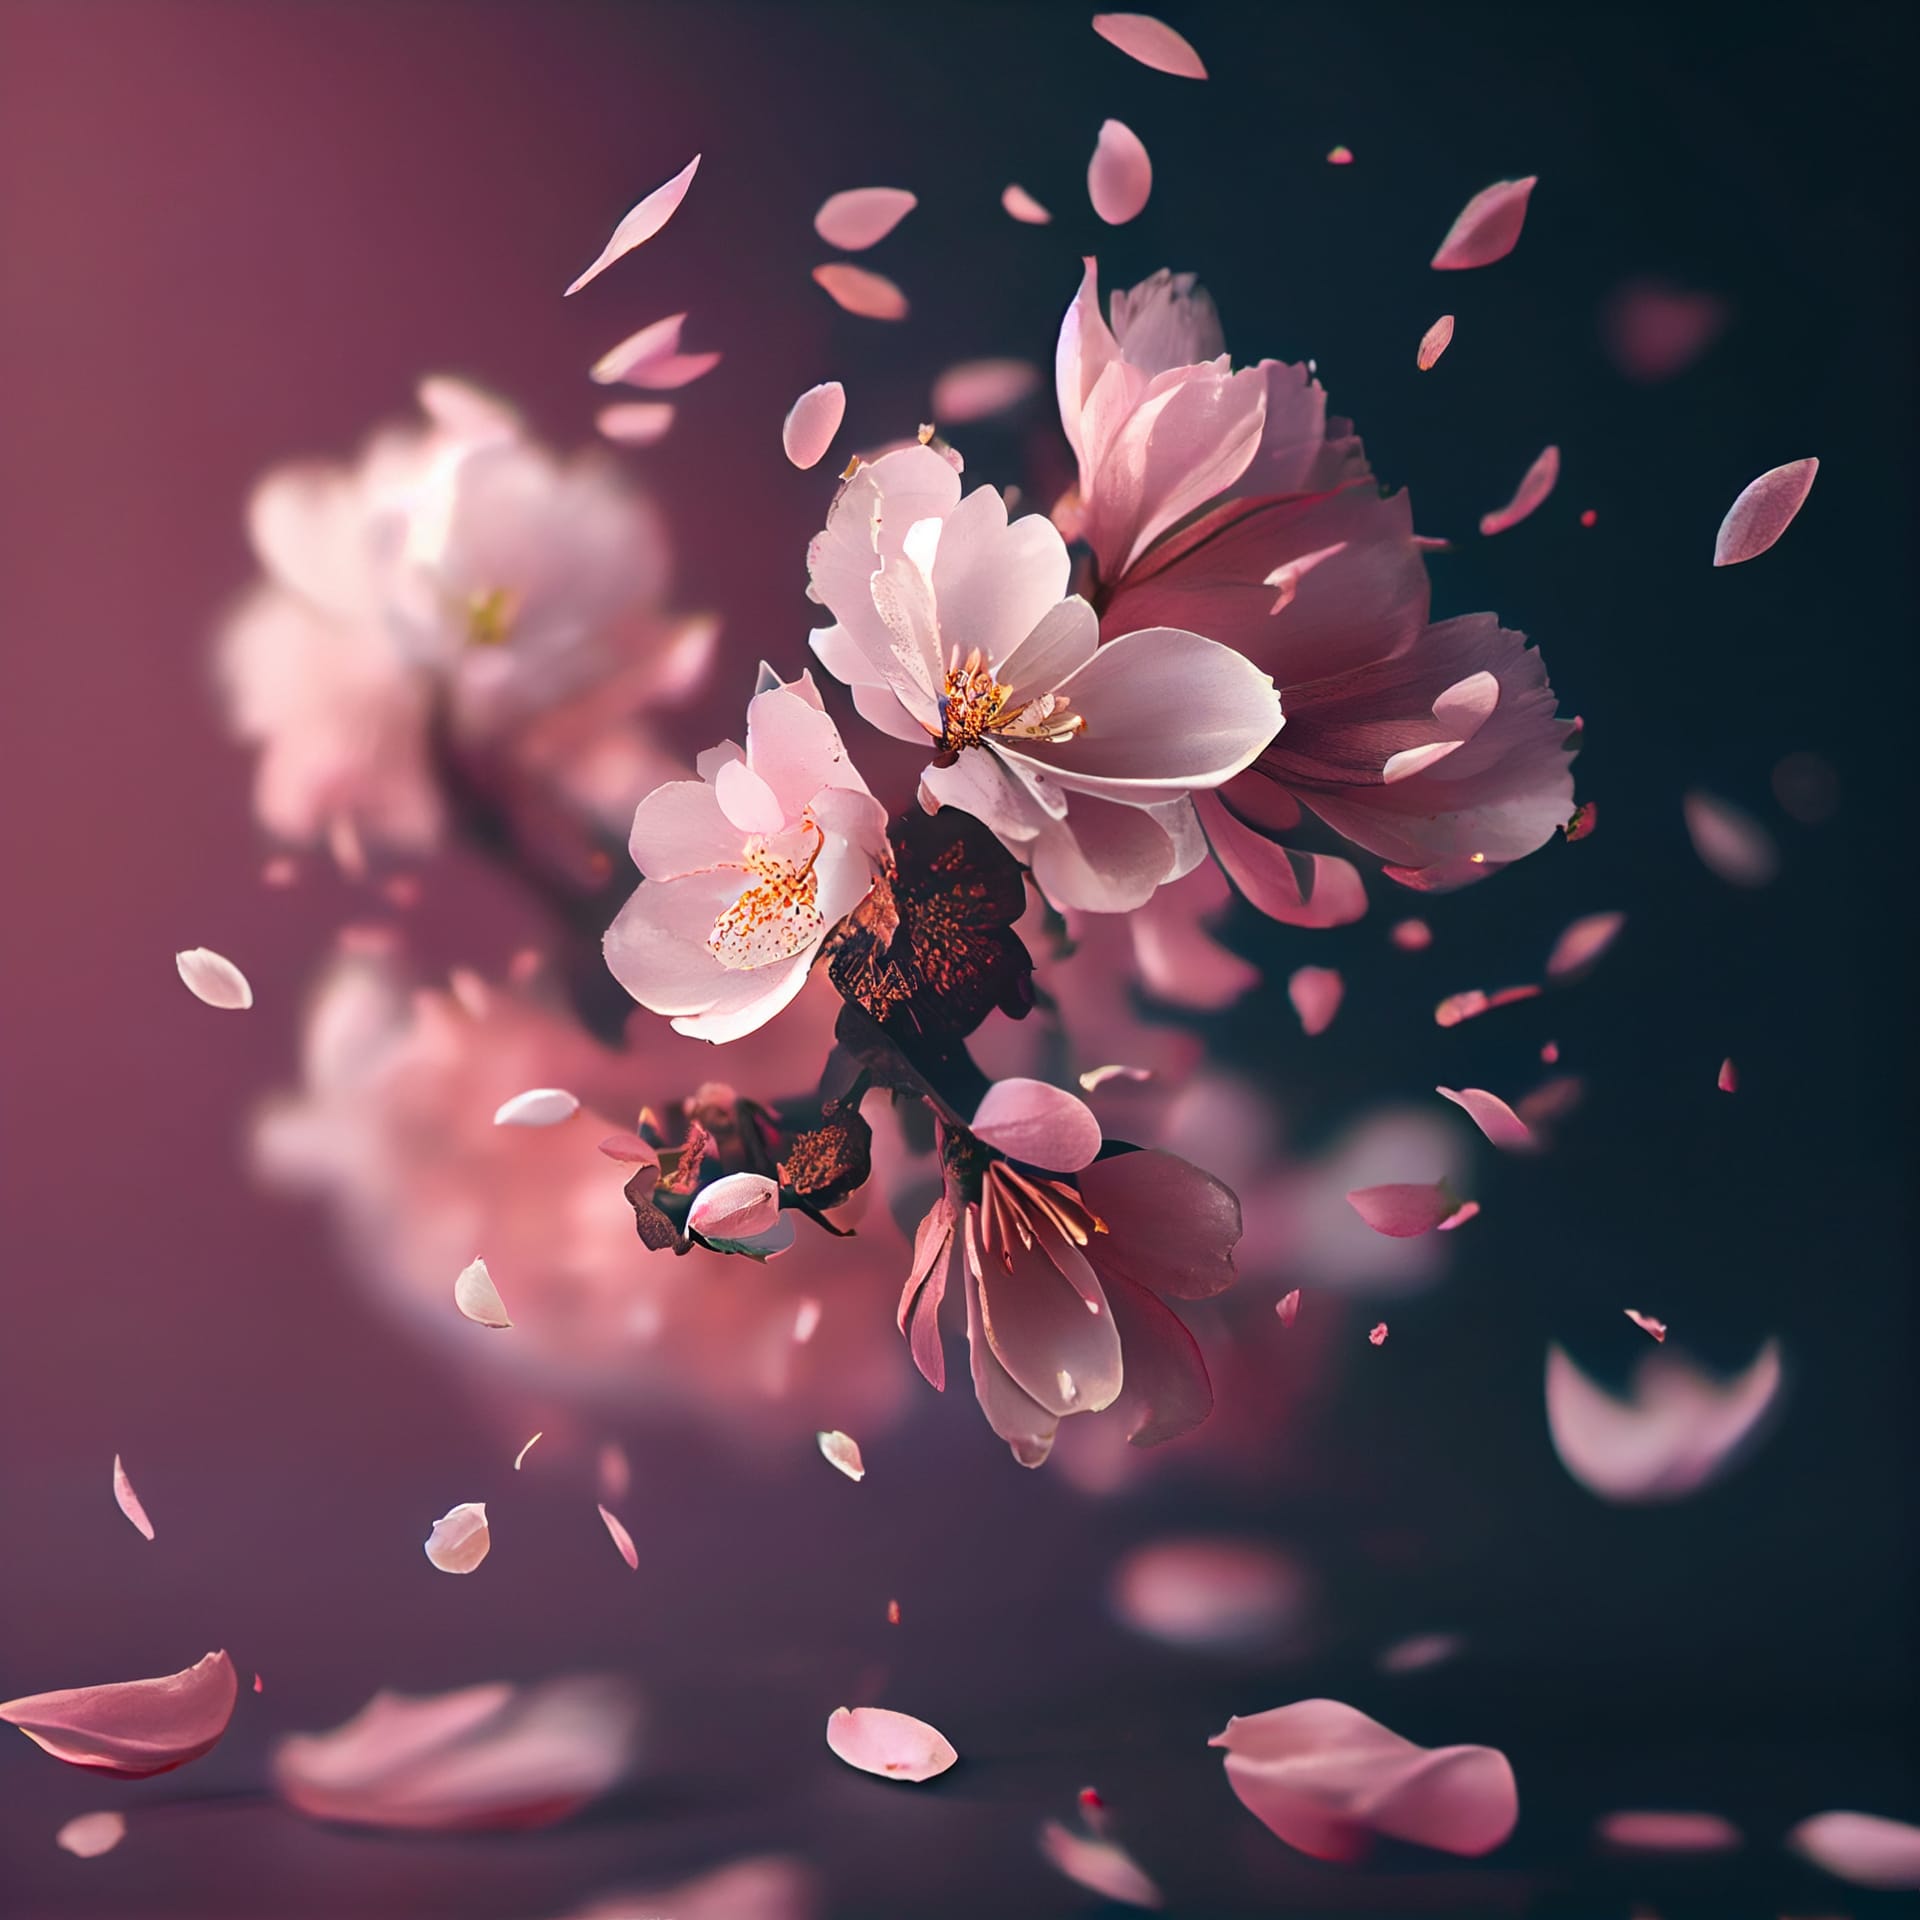 Cherry blossom sakura pink flowers petals floral illustration picture